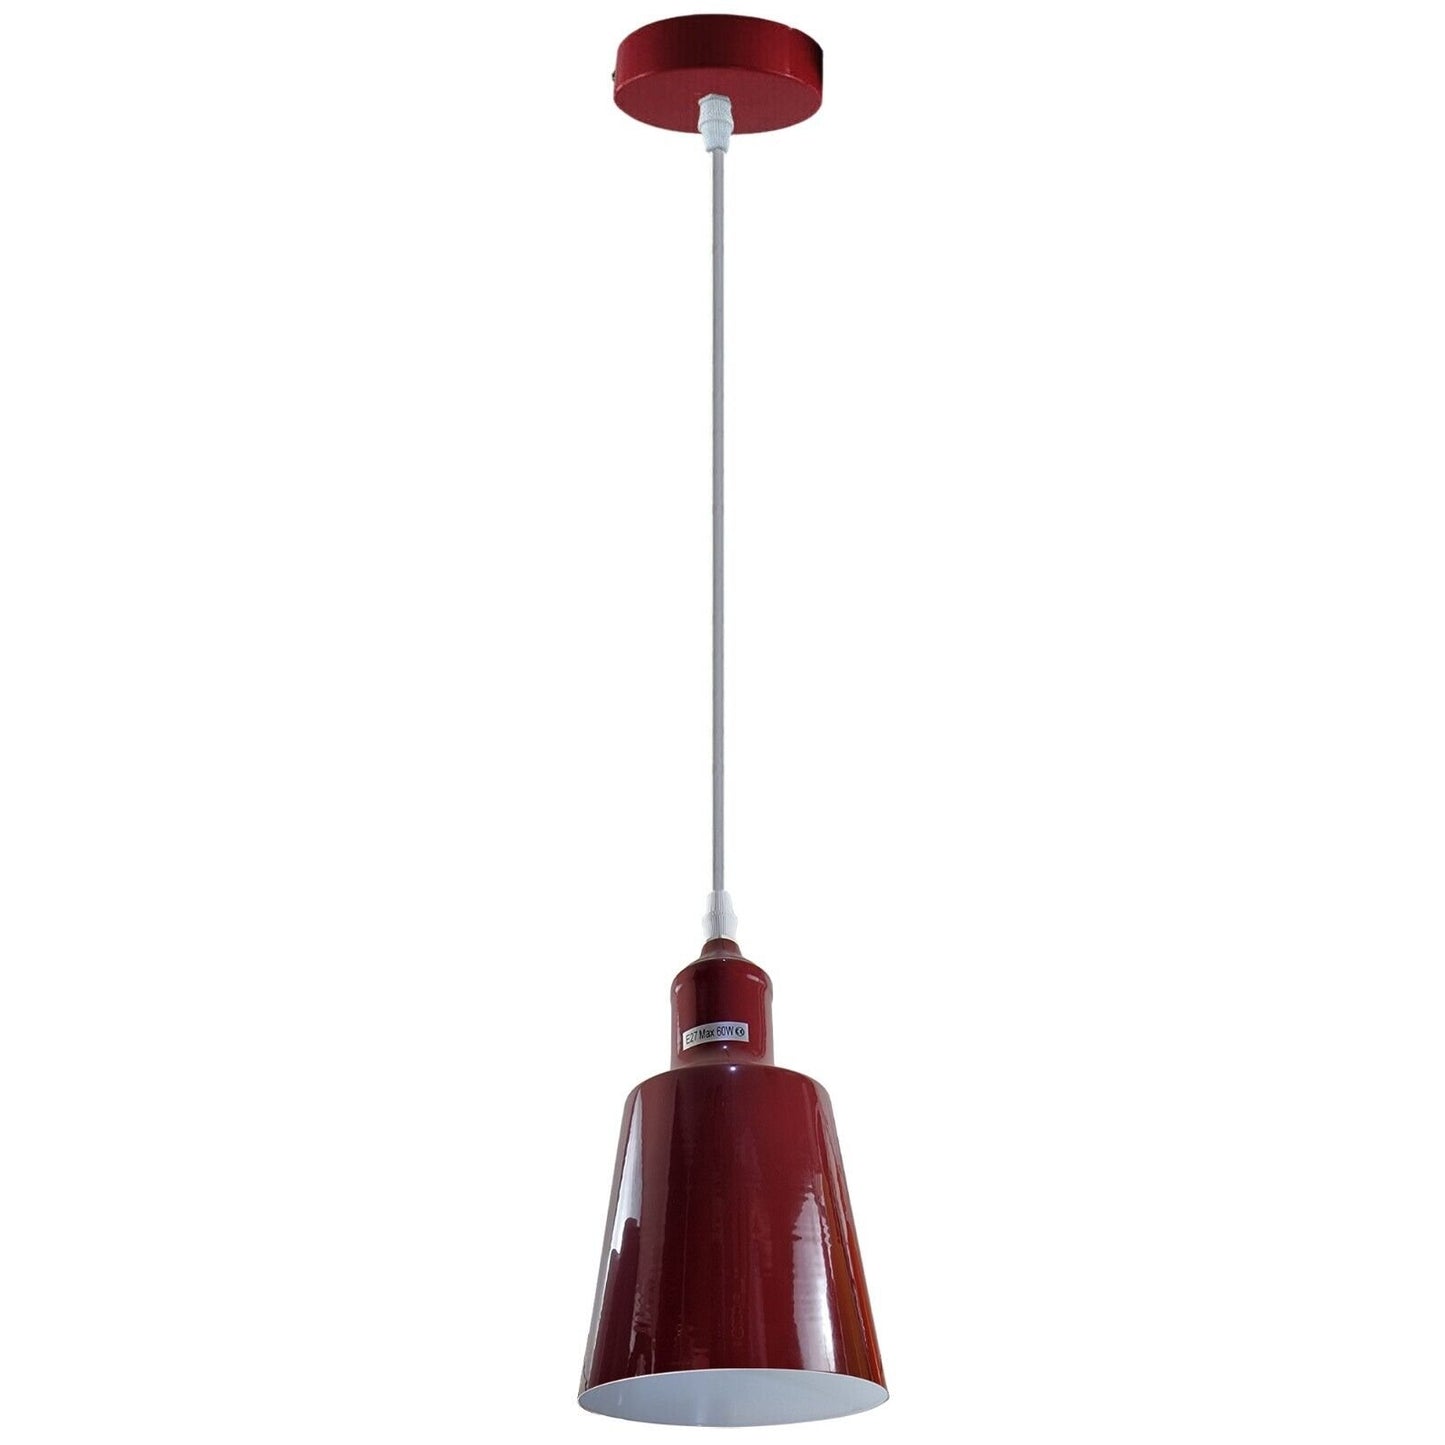 Vintage Metal Ceiling Lamp Shade Chandelier Pendant Light